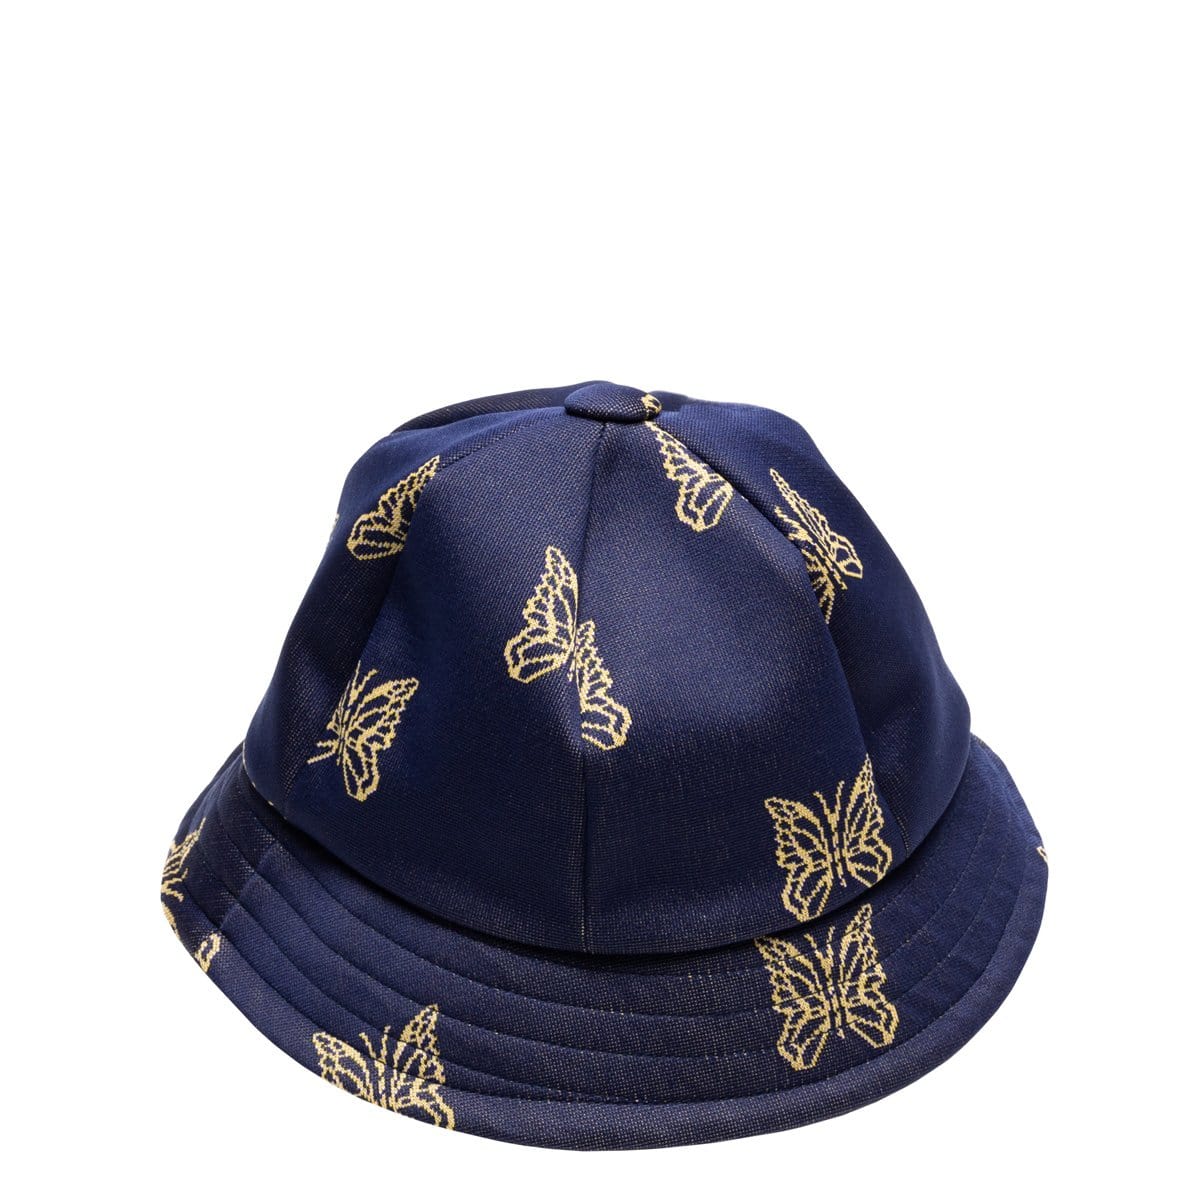 Needles BERMUDA HAT - BRITISH TWEED Lサイズ - 帽子